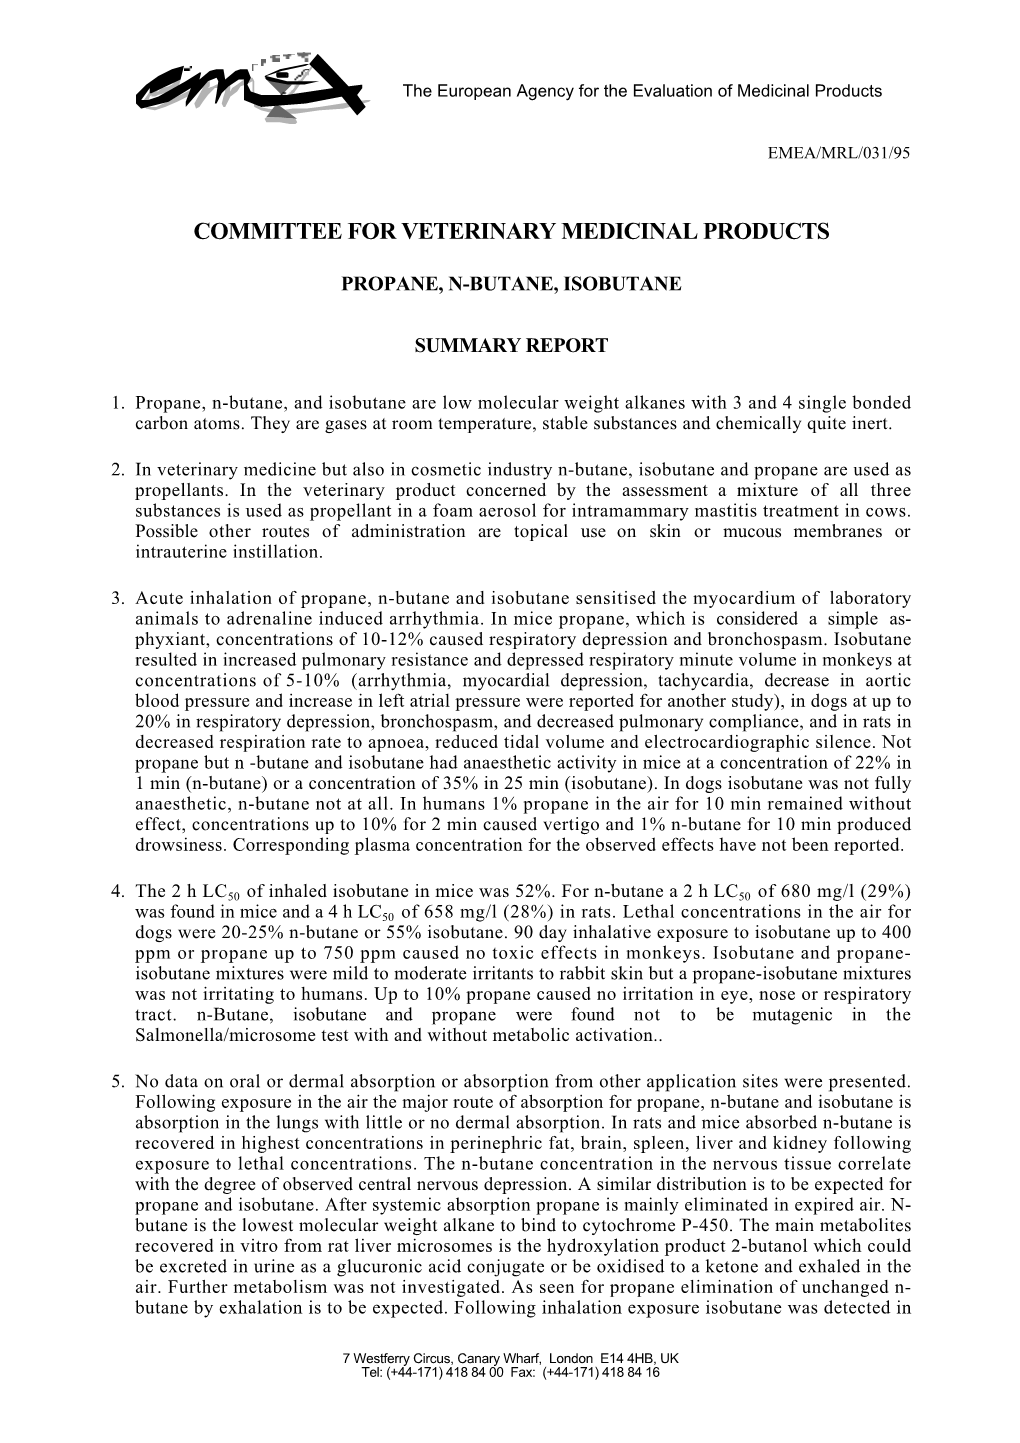 Propane-N-Butane-Isobutane-Summary-Report-Committee-Veterinary-Medicinal-Products En.Pdf